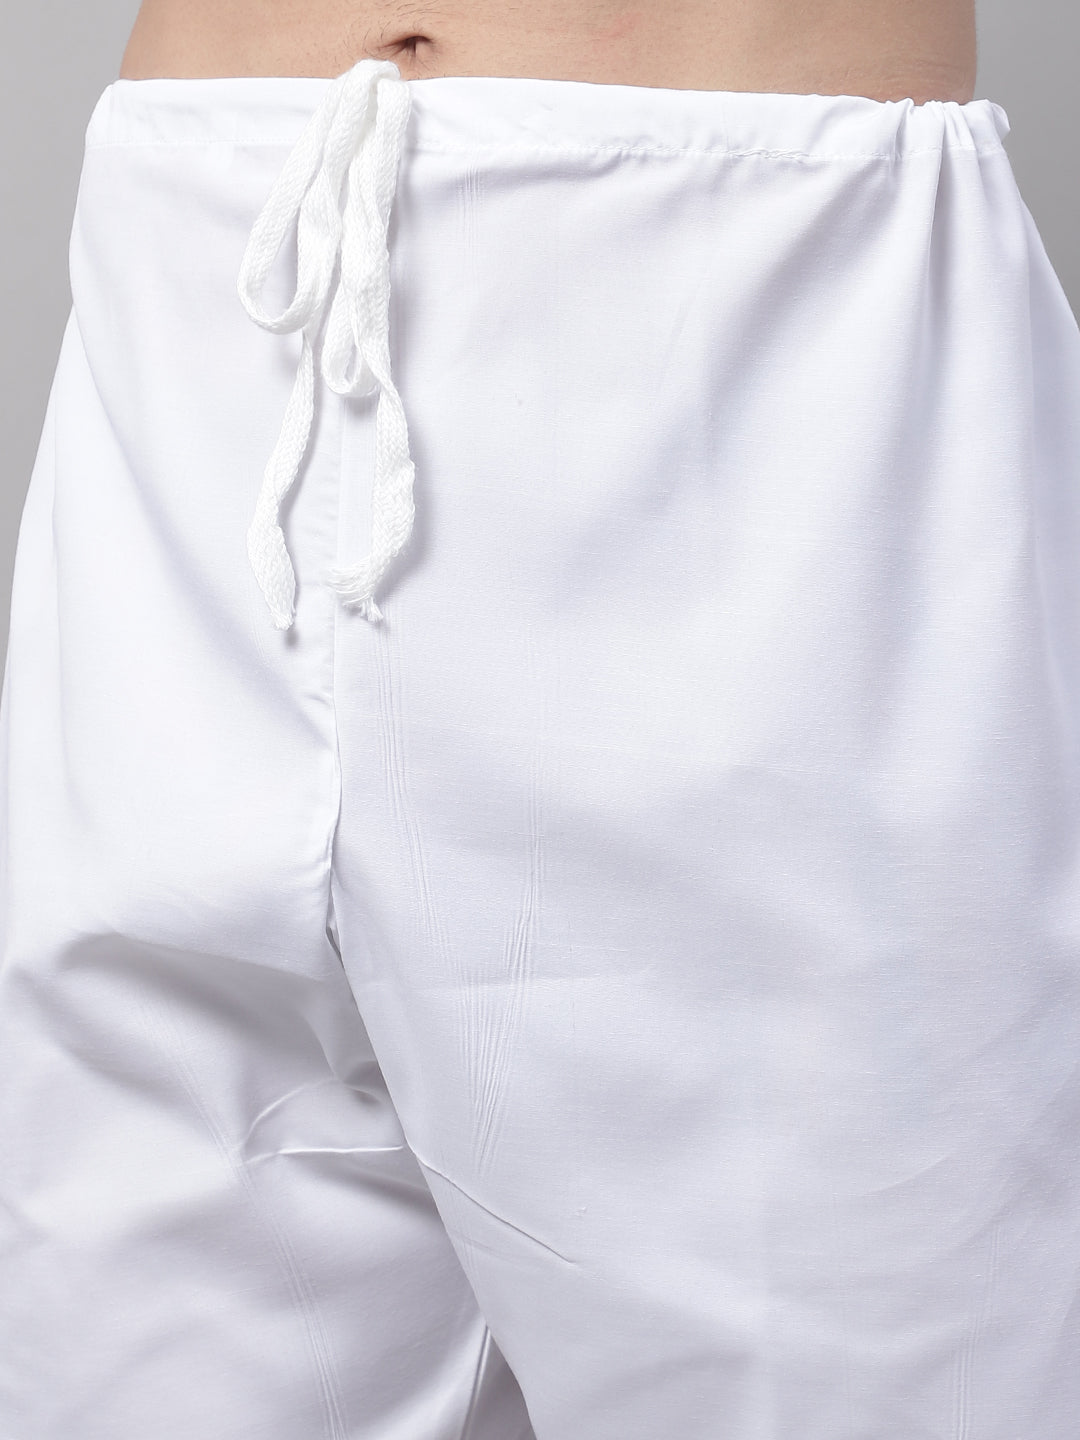 Jompers Men's Cotton Solid Kurta Payjama Sets